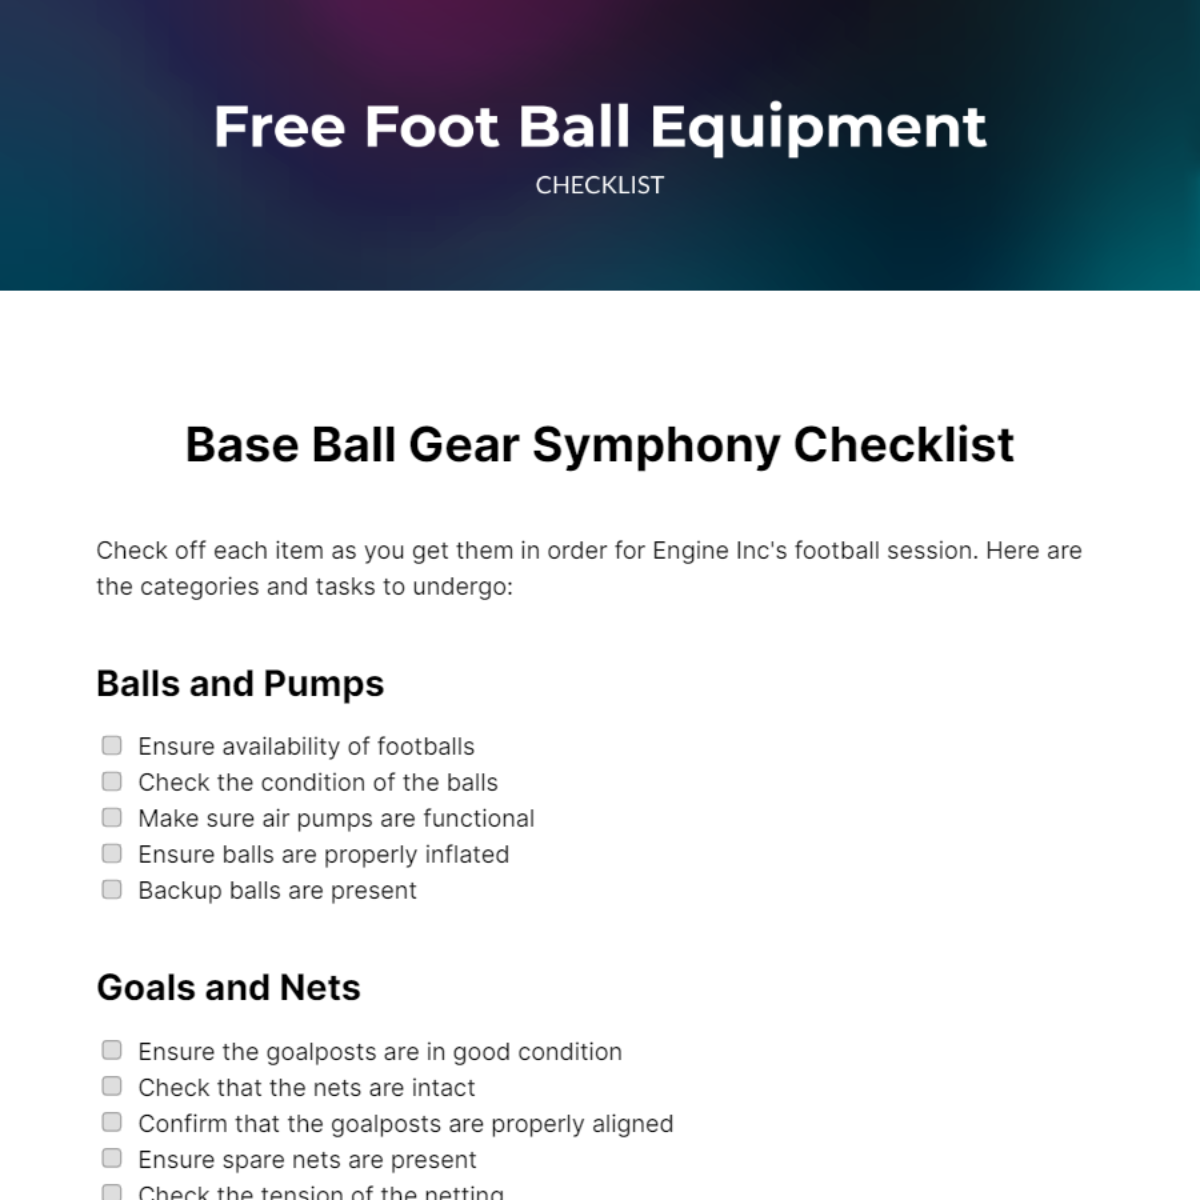 Free Foot Ball Equipment Checklist Template